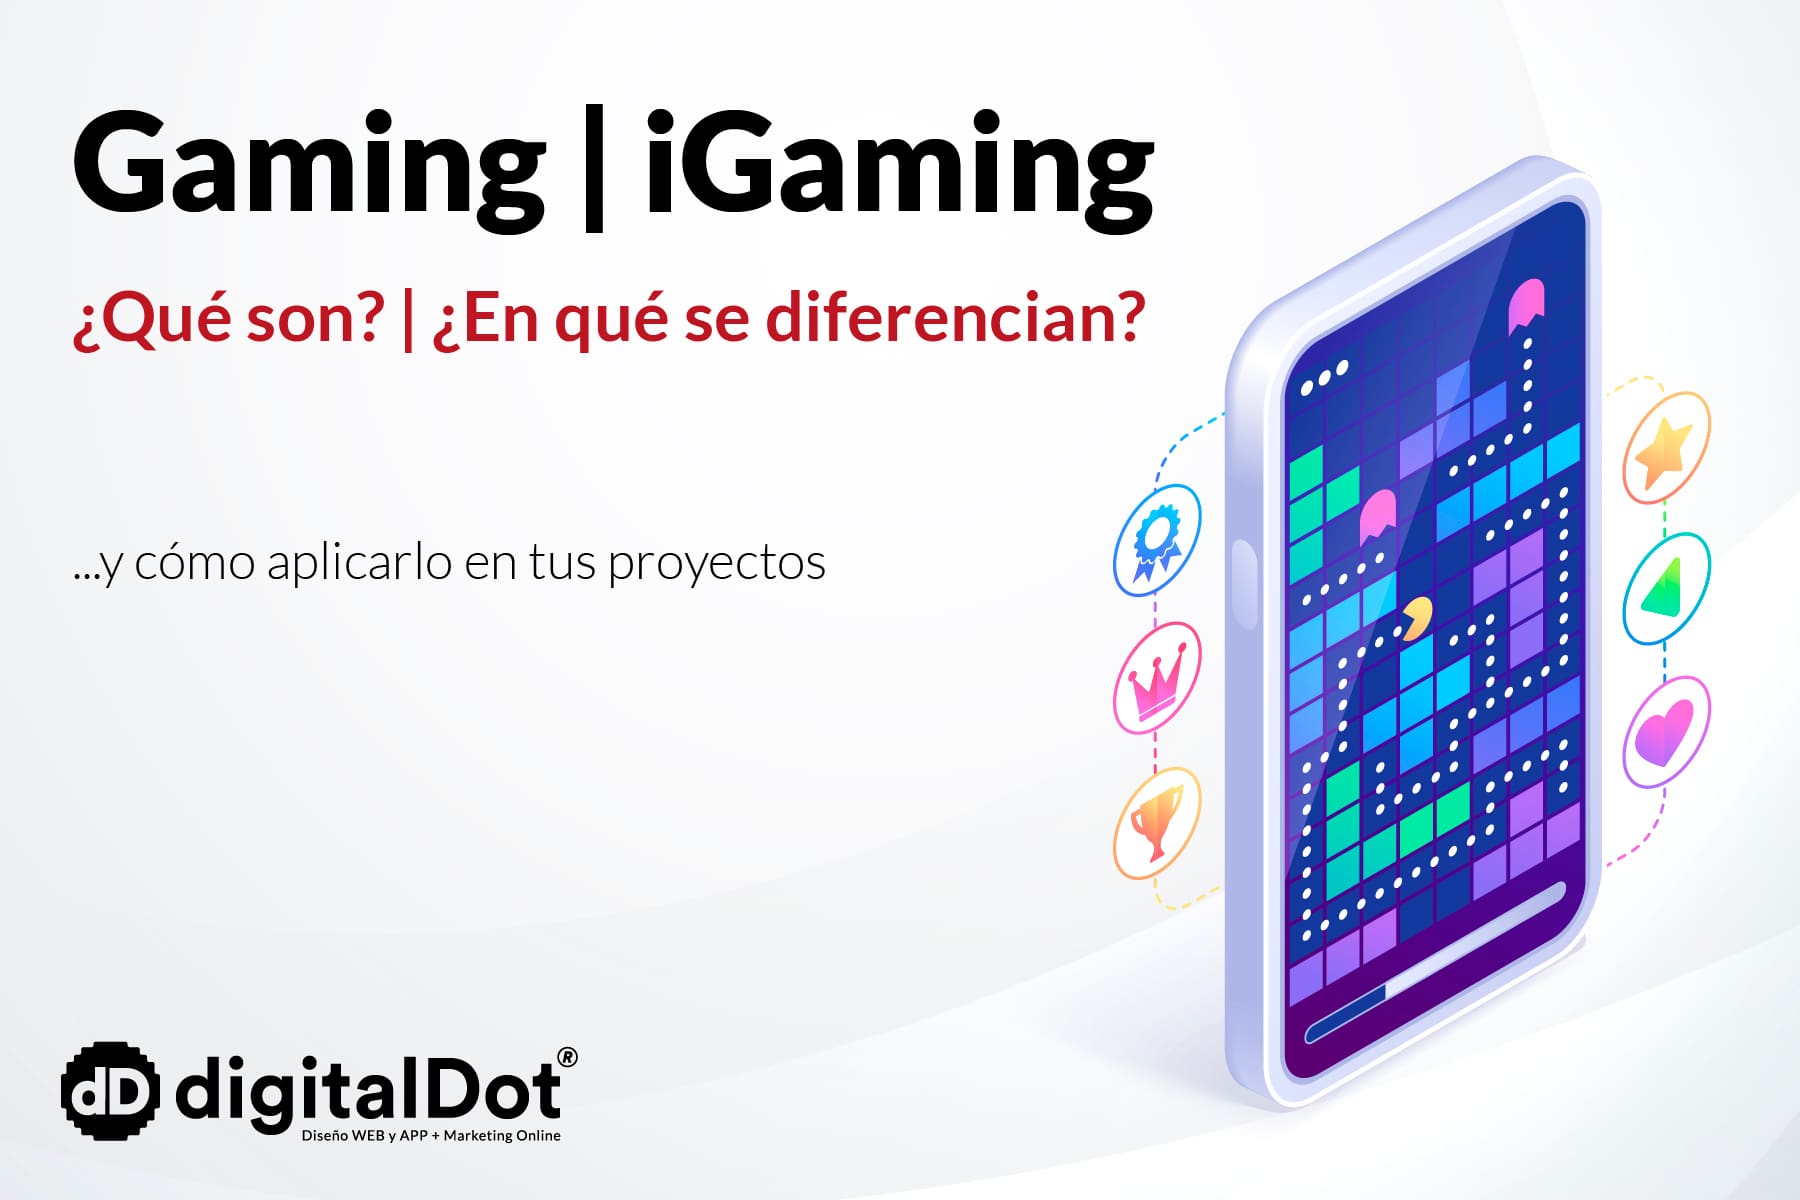 diferencia entre gaming y igaming - digitalDot